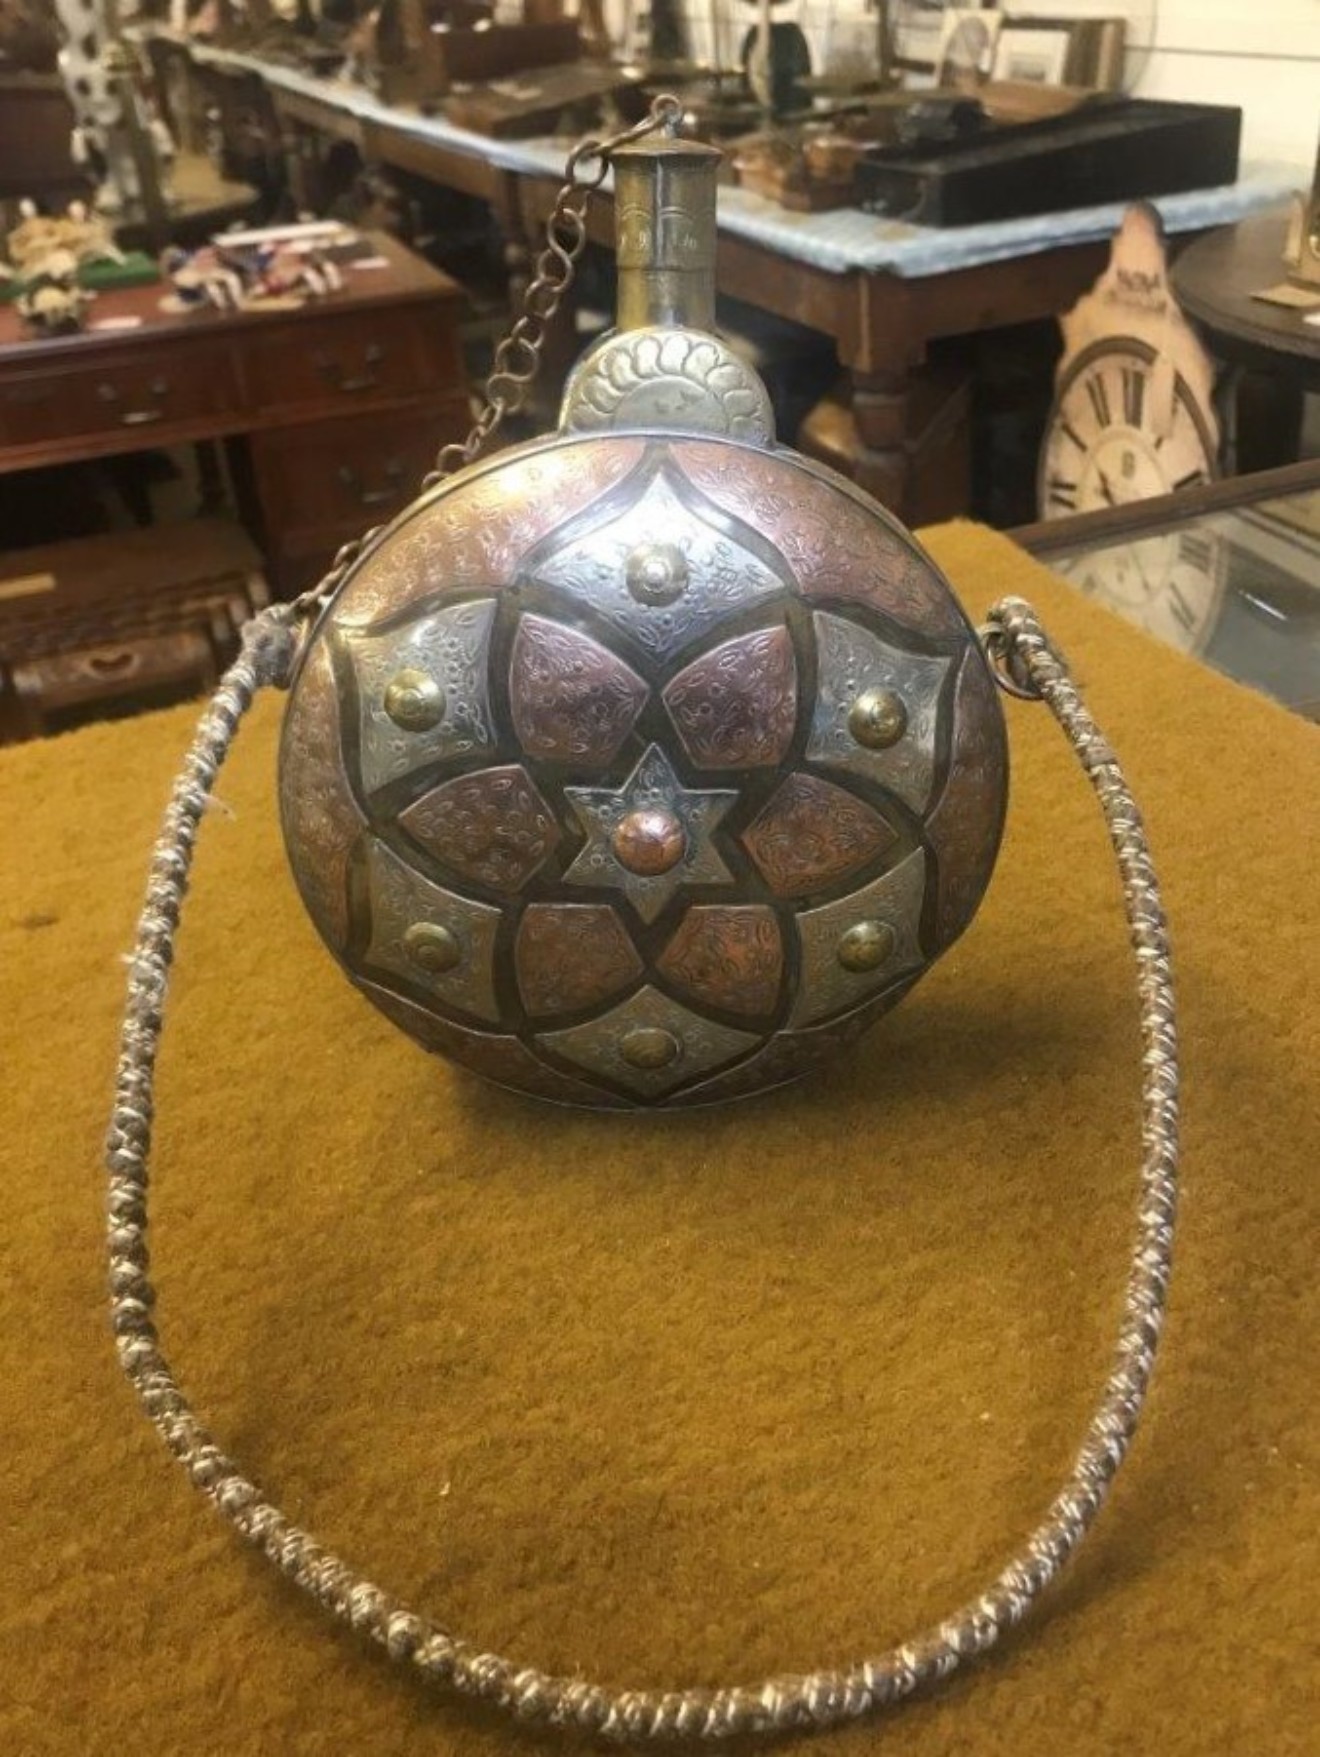 Vintage North African Copper Brass Powder / Water Flask